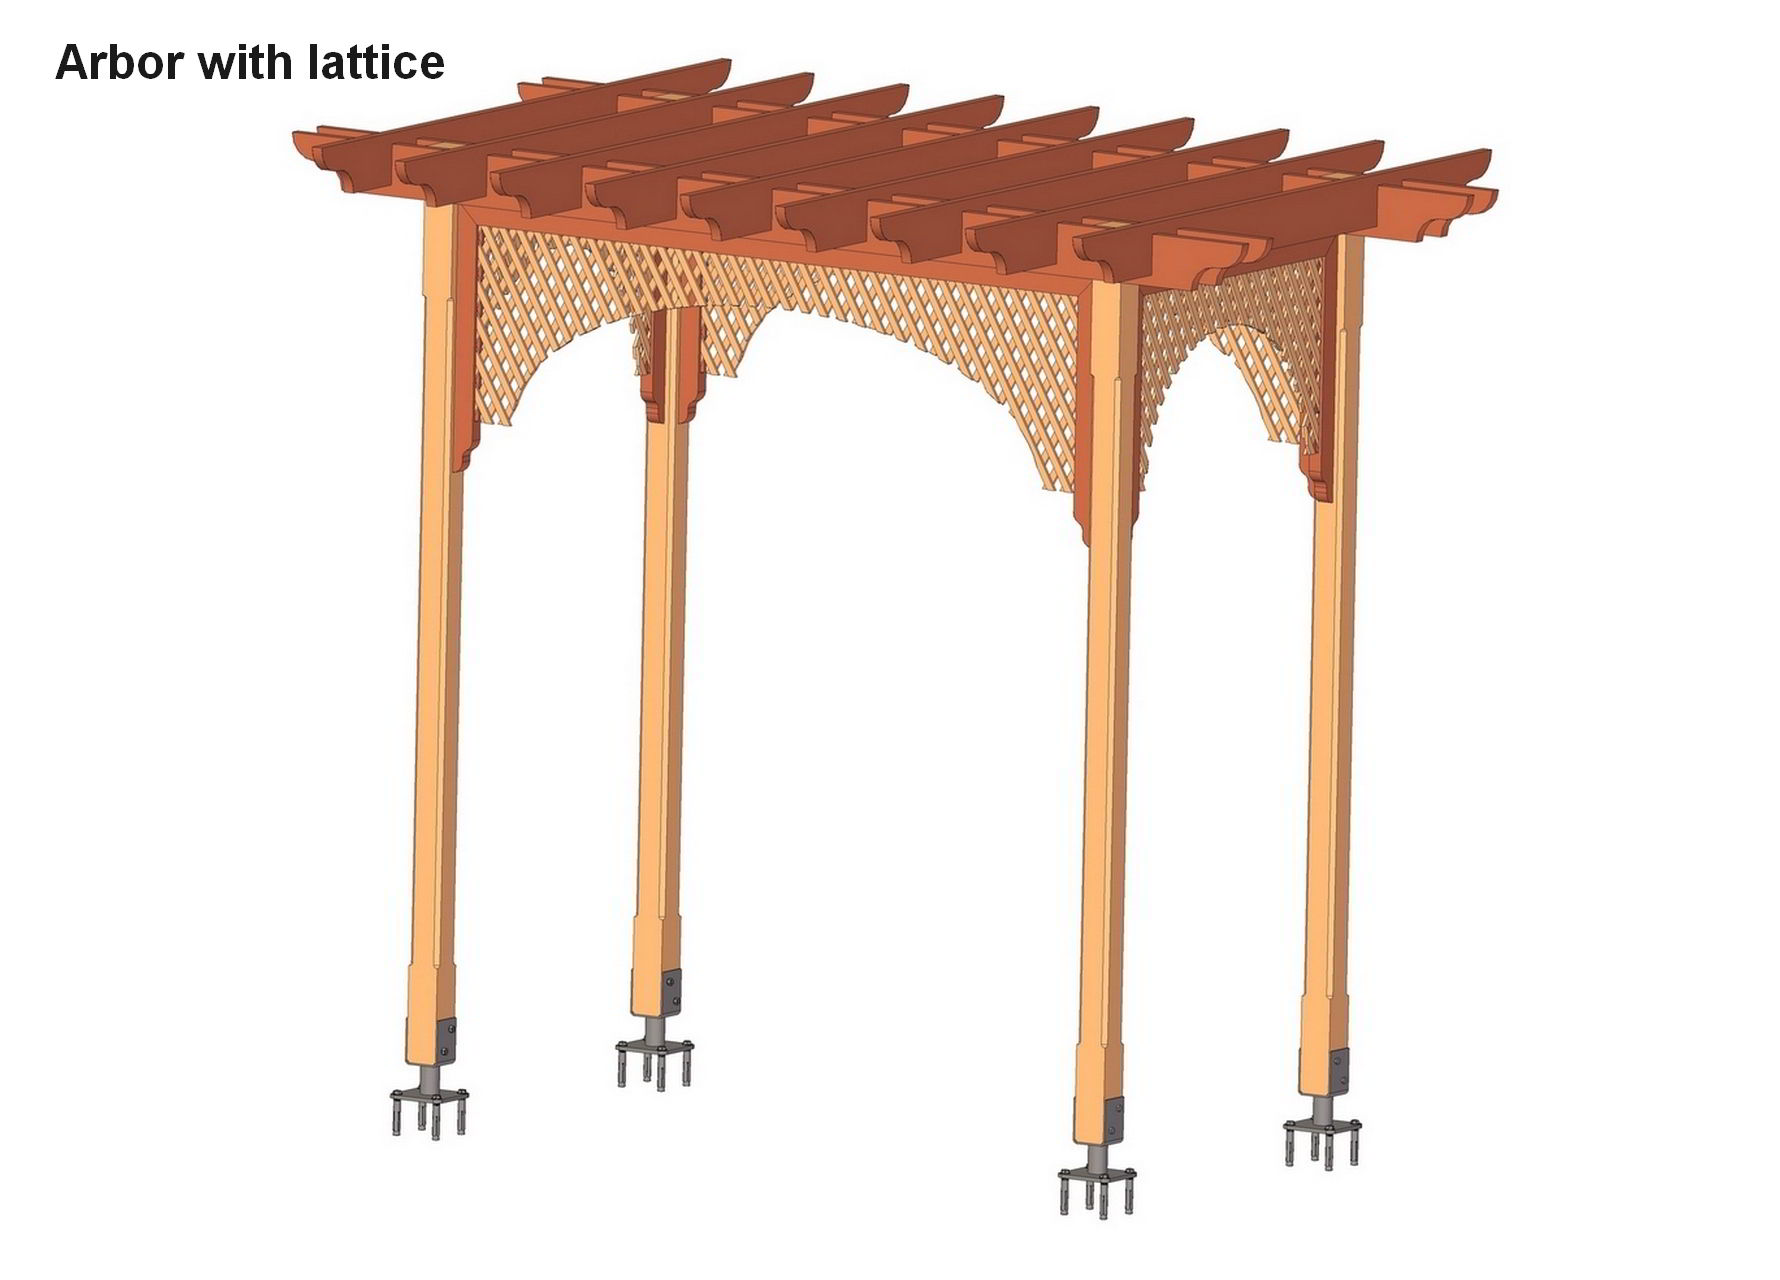 Garden wooden arbor with lattice plan